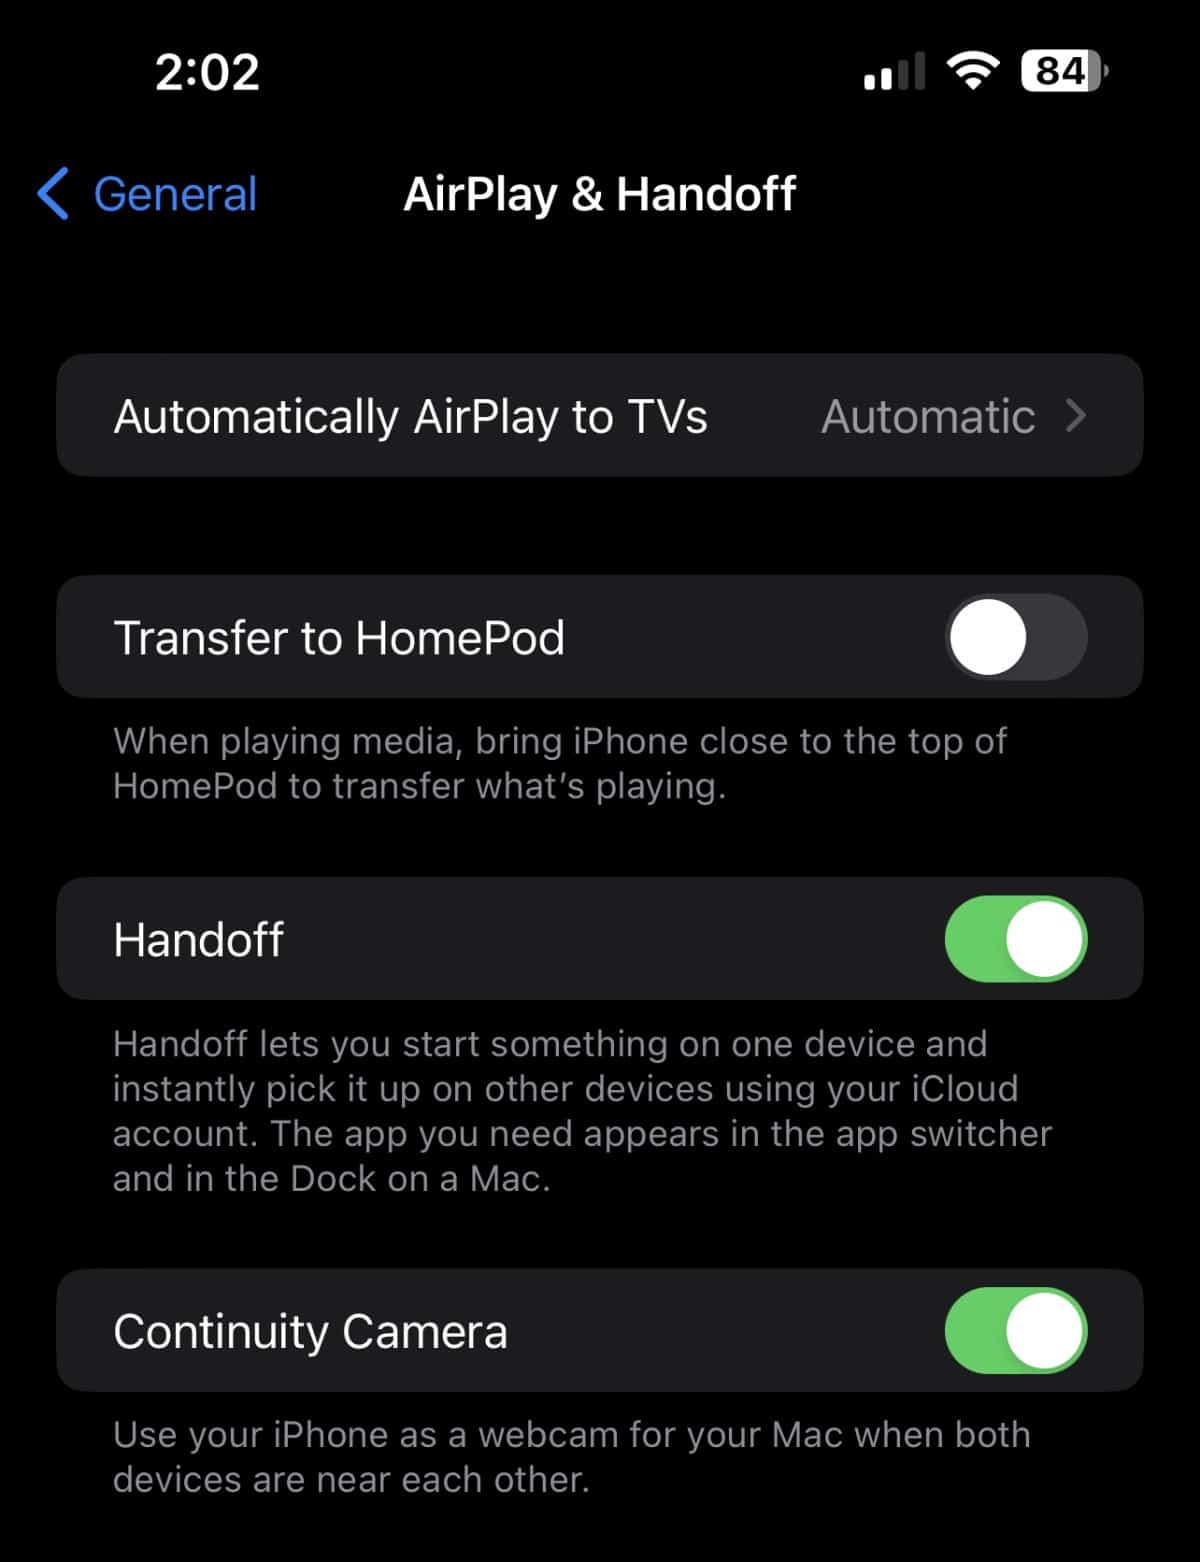 Tap AirPlay & Handoff